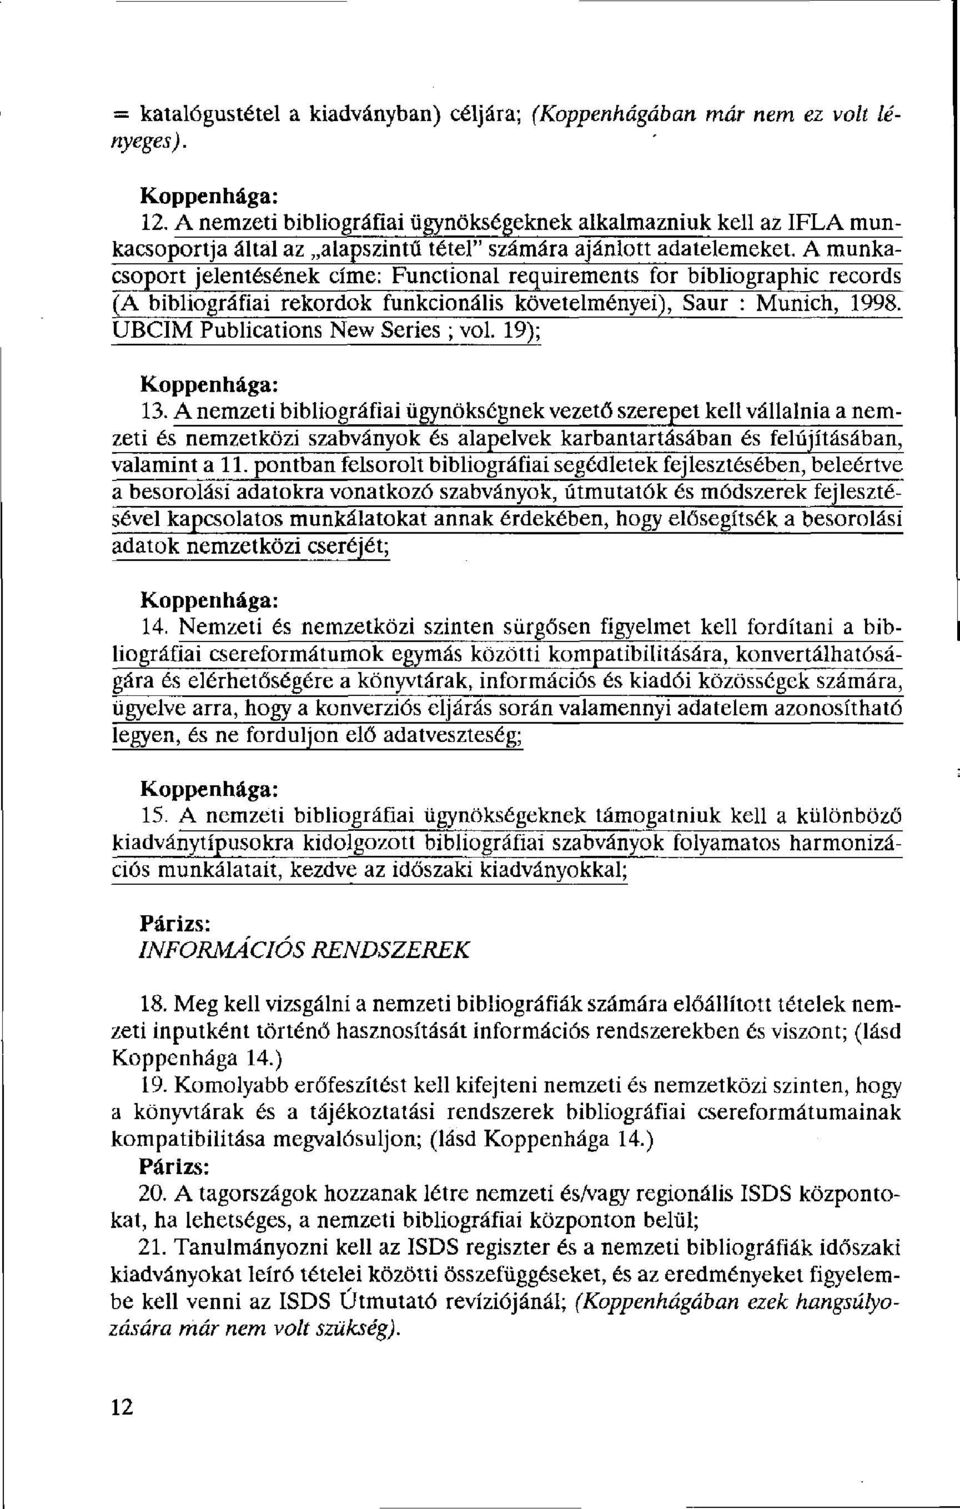 A munkacsoport jelentésének címe: Functional requirements for bibliographic records (A bibliográfiai rekordok funkcionális követelményei), Säur : Munich, 1998. UBCIM Publications New Series ; vol.